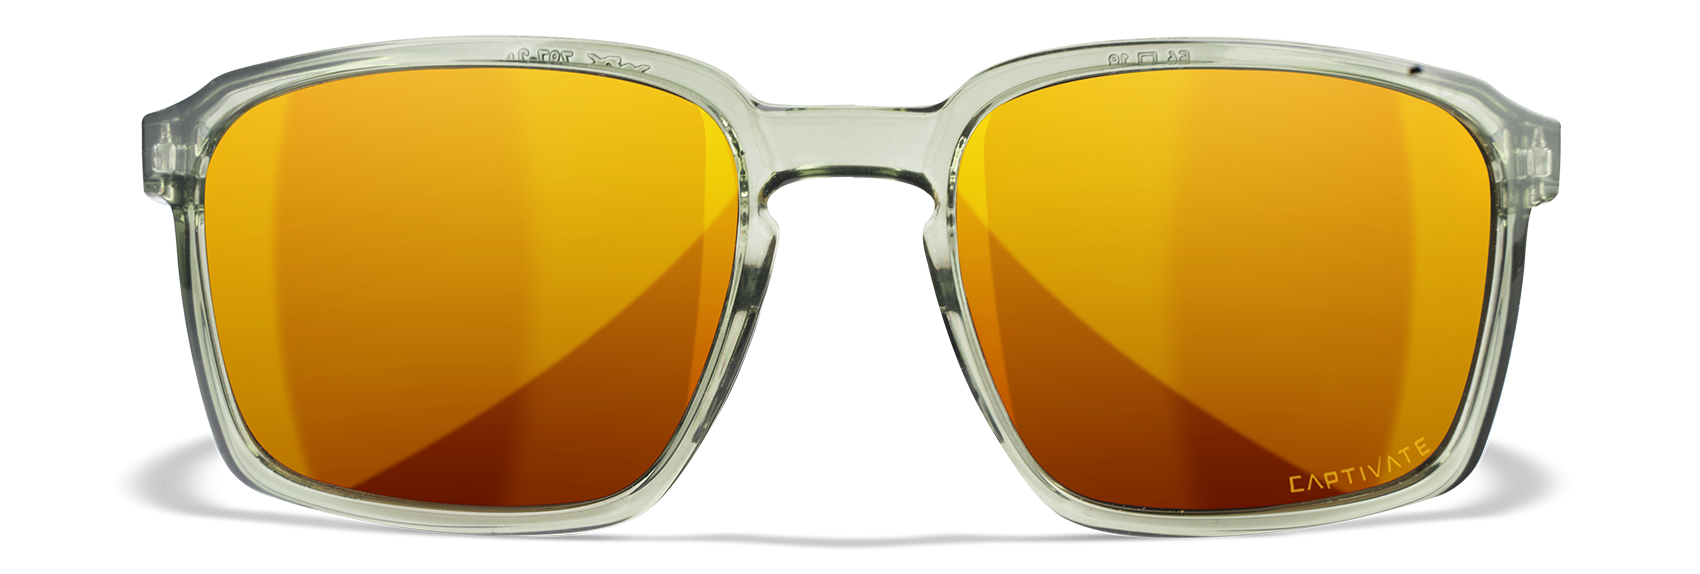 Wiley X Alfa Sunglasses, 3 colors